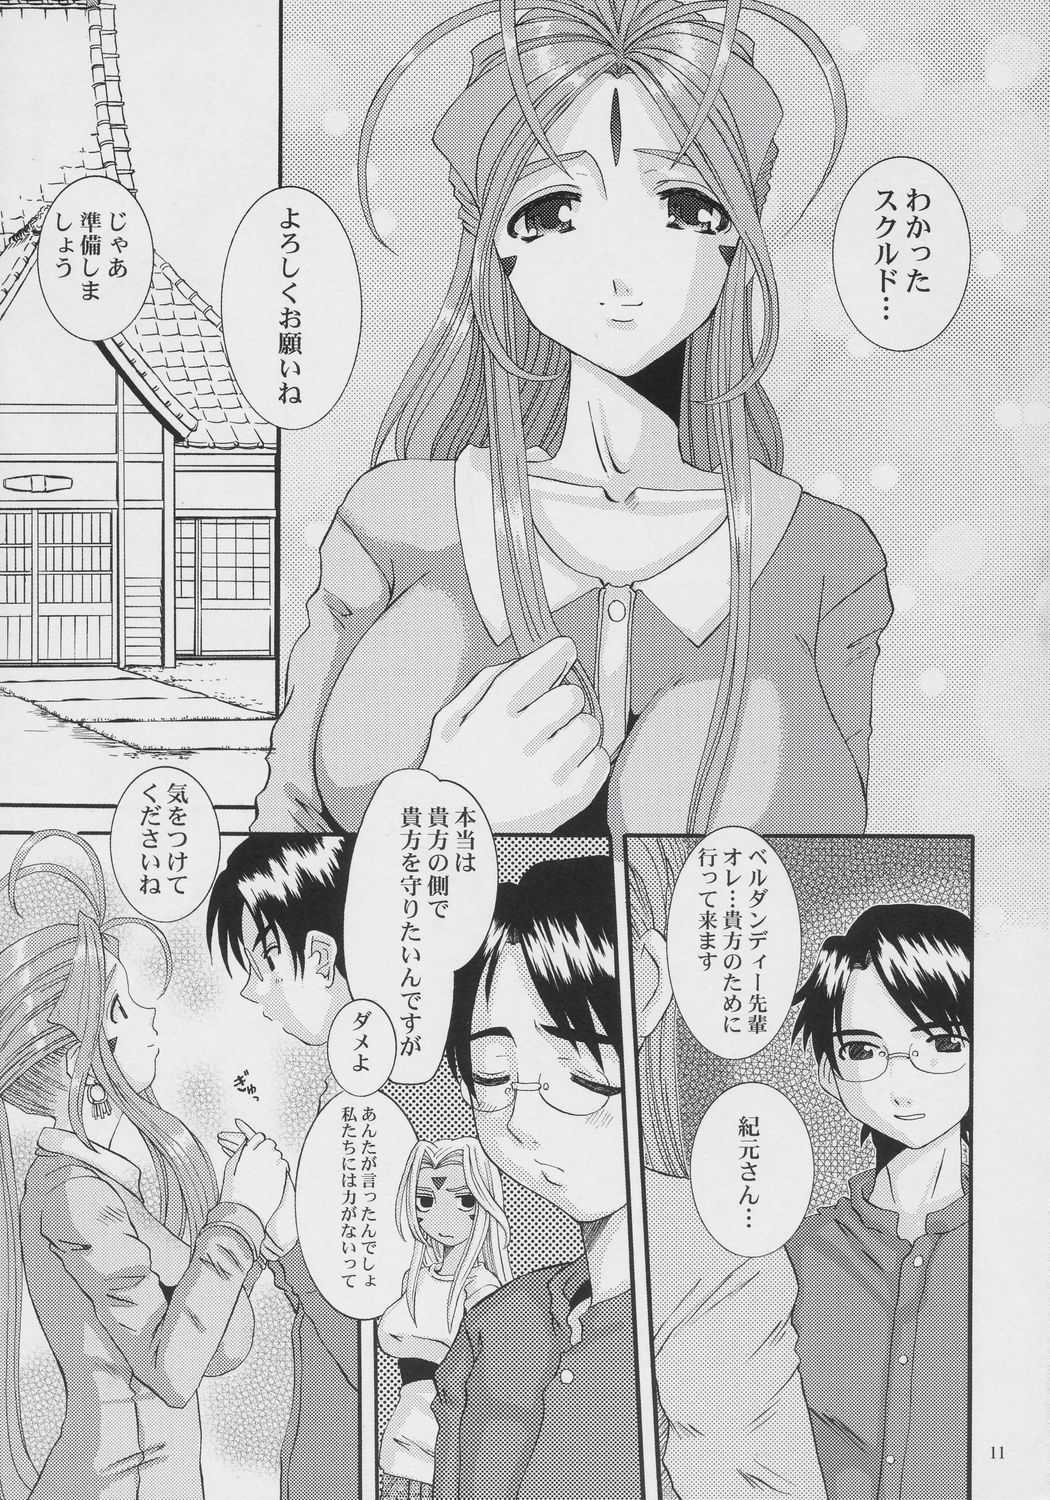 [Tenzan Factory] Nightmare of My Goddess vol.8 (Ah! Megami-sama/Ah! My Goddess) [天山工房] Nightmare of My Goddess vol.8 (ああっ女神さまっ)